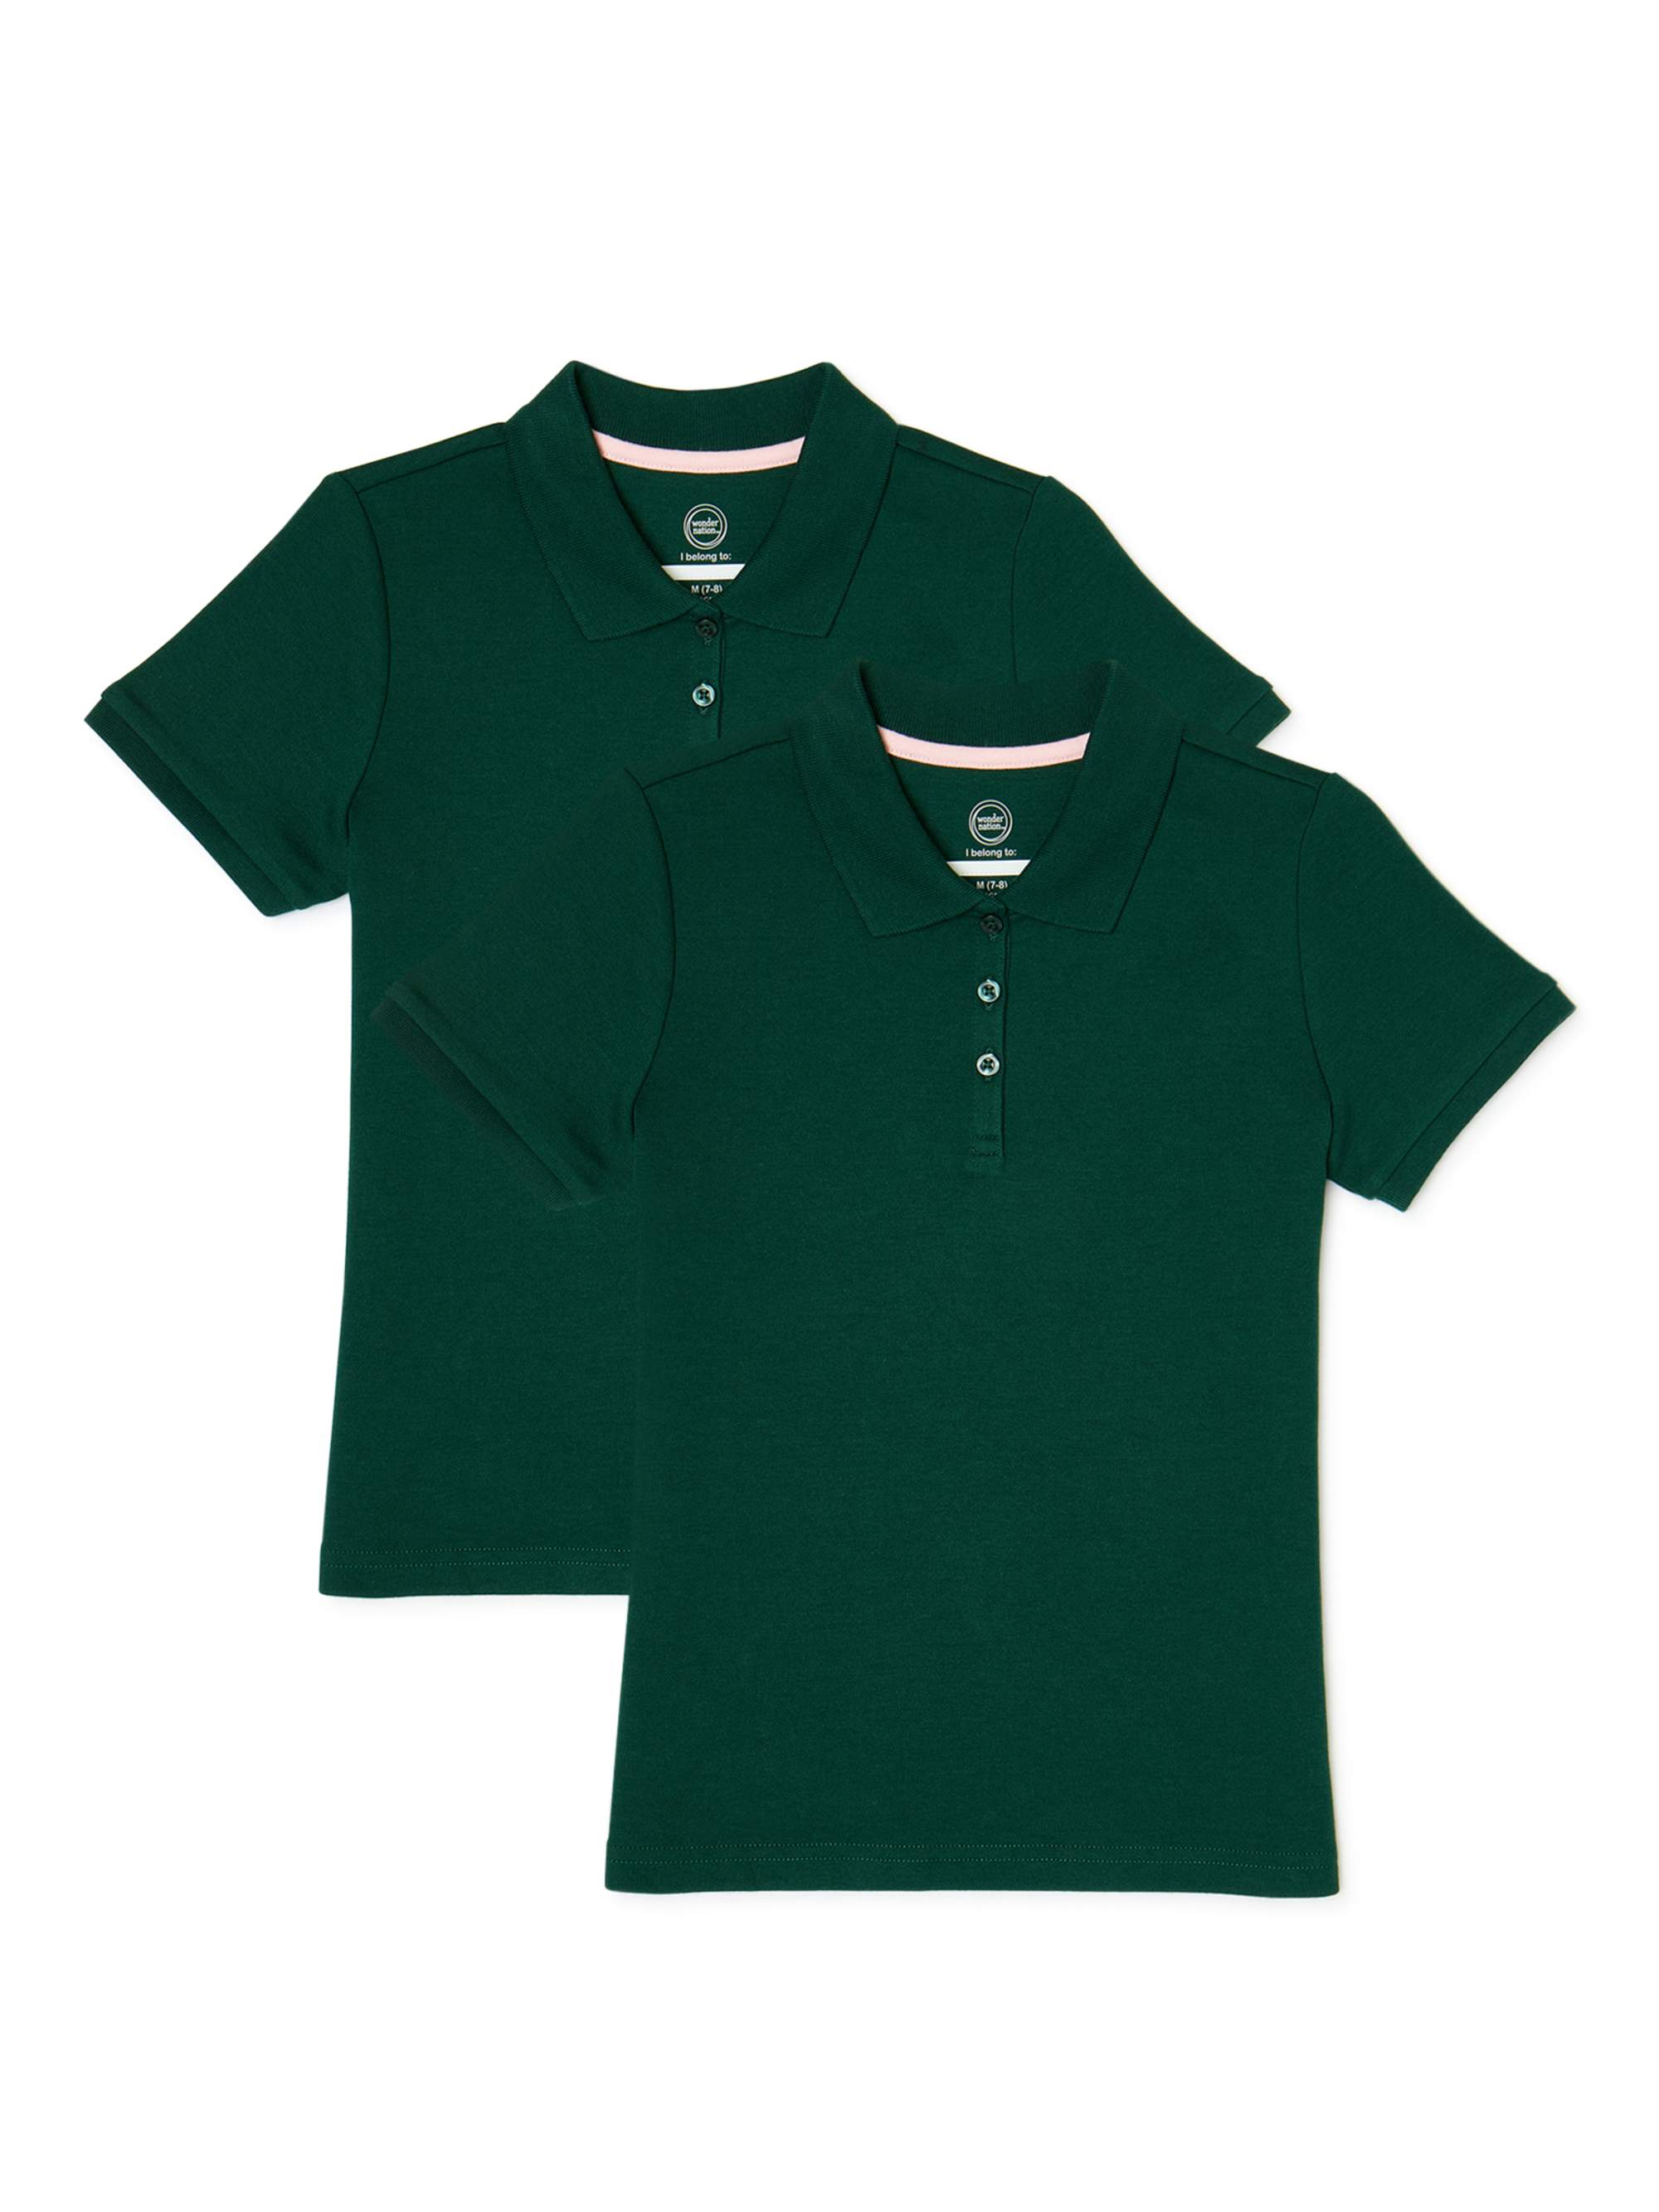 Dollar Jeans Childrens Boys Girls Kelly Green Polo Shirt 7-8 Years 28 School Uniform Short Sleeve